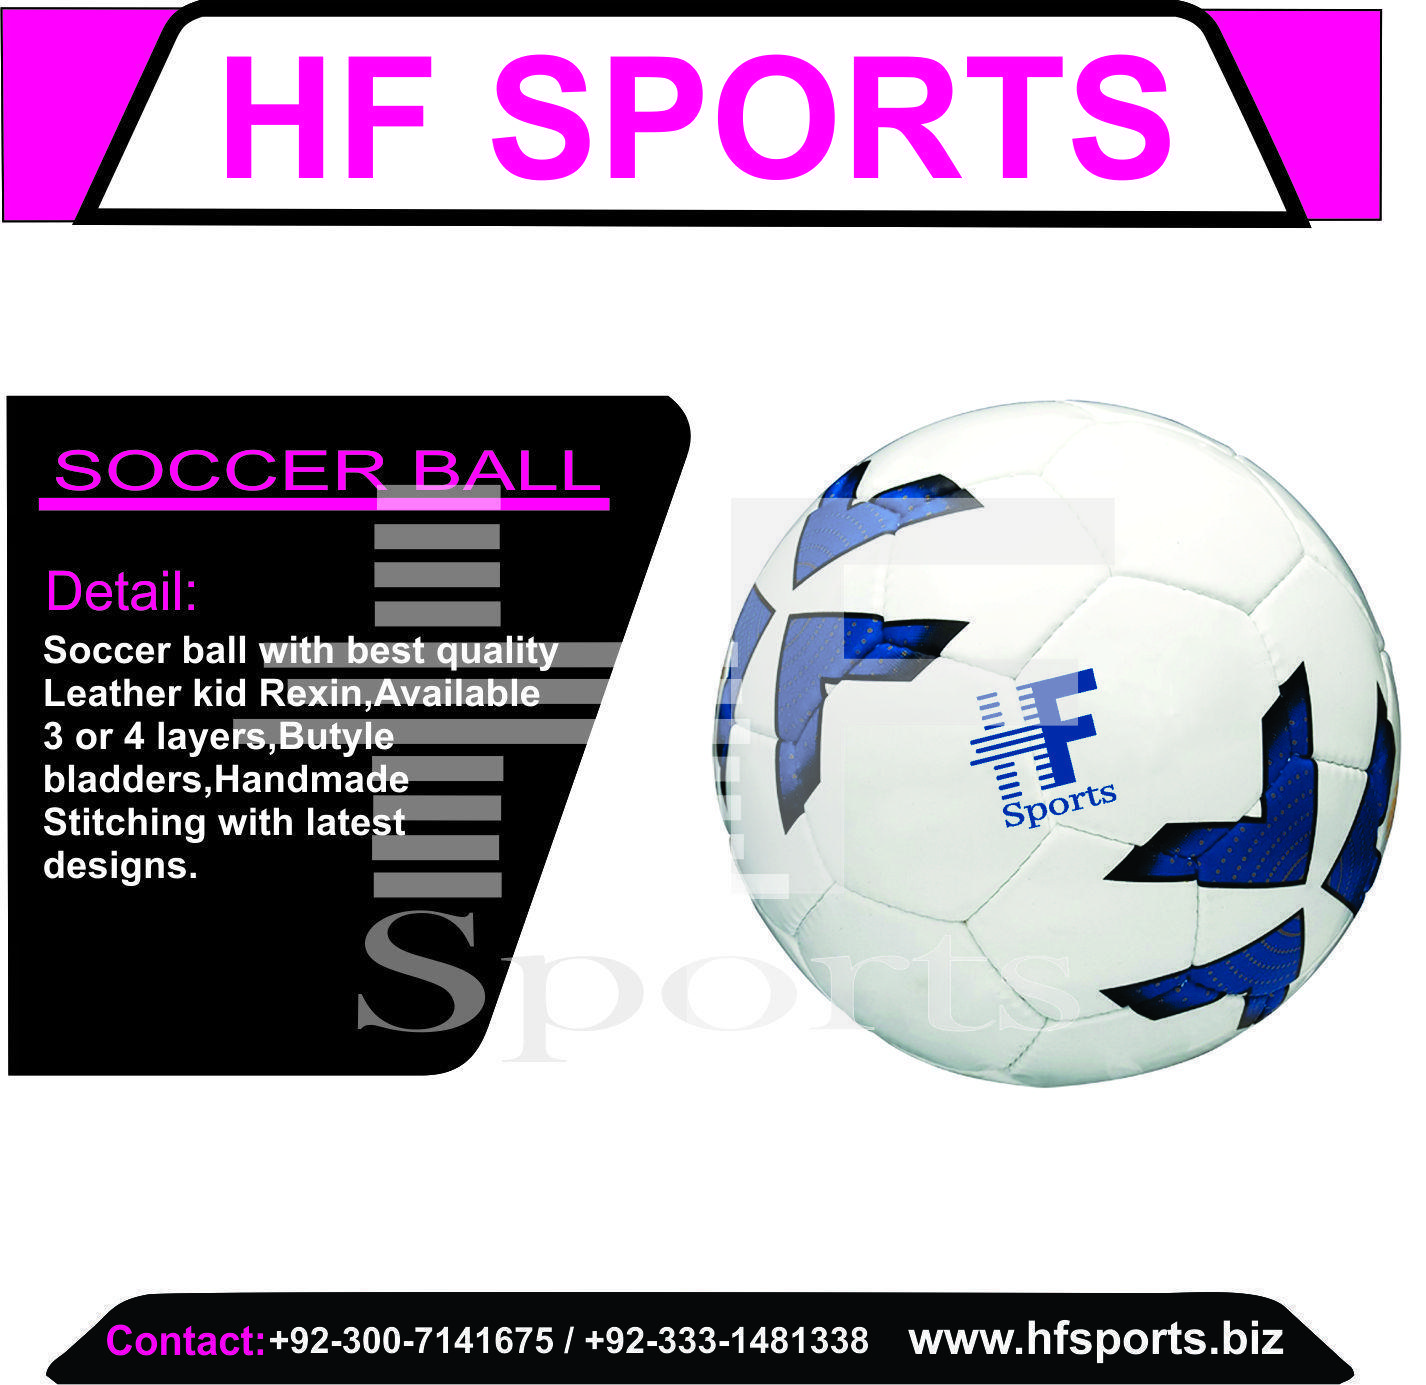 HF Sports Logo - 7 Best Baseball Bat and Soccer Balls Manufacturers in Pakistan | HF ...